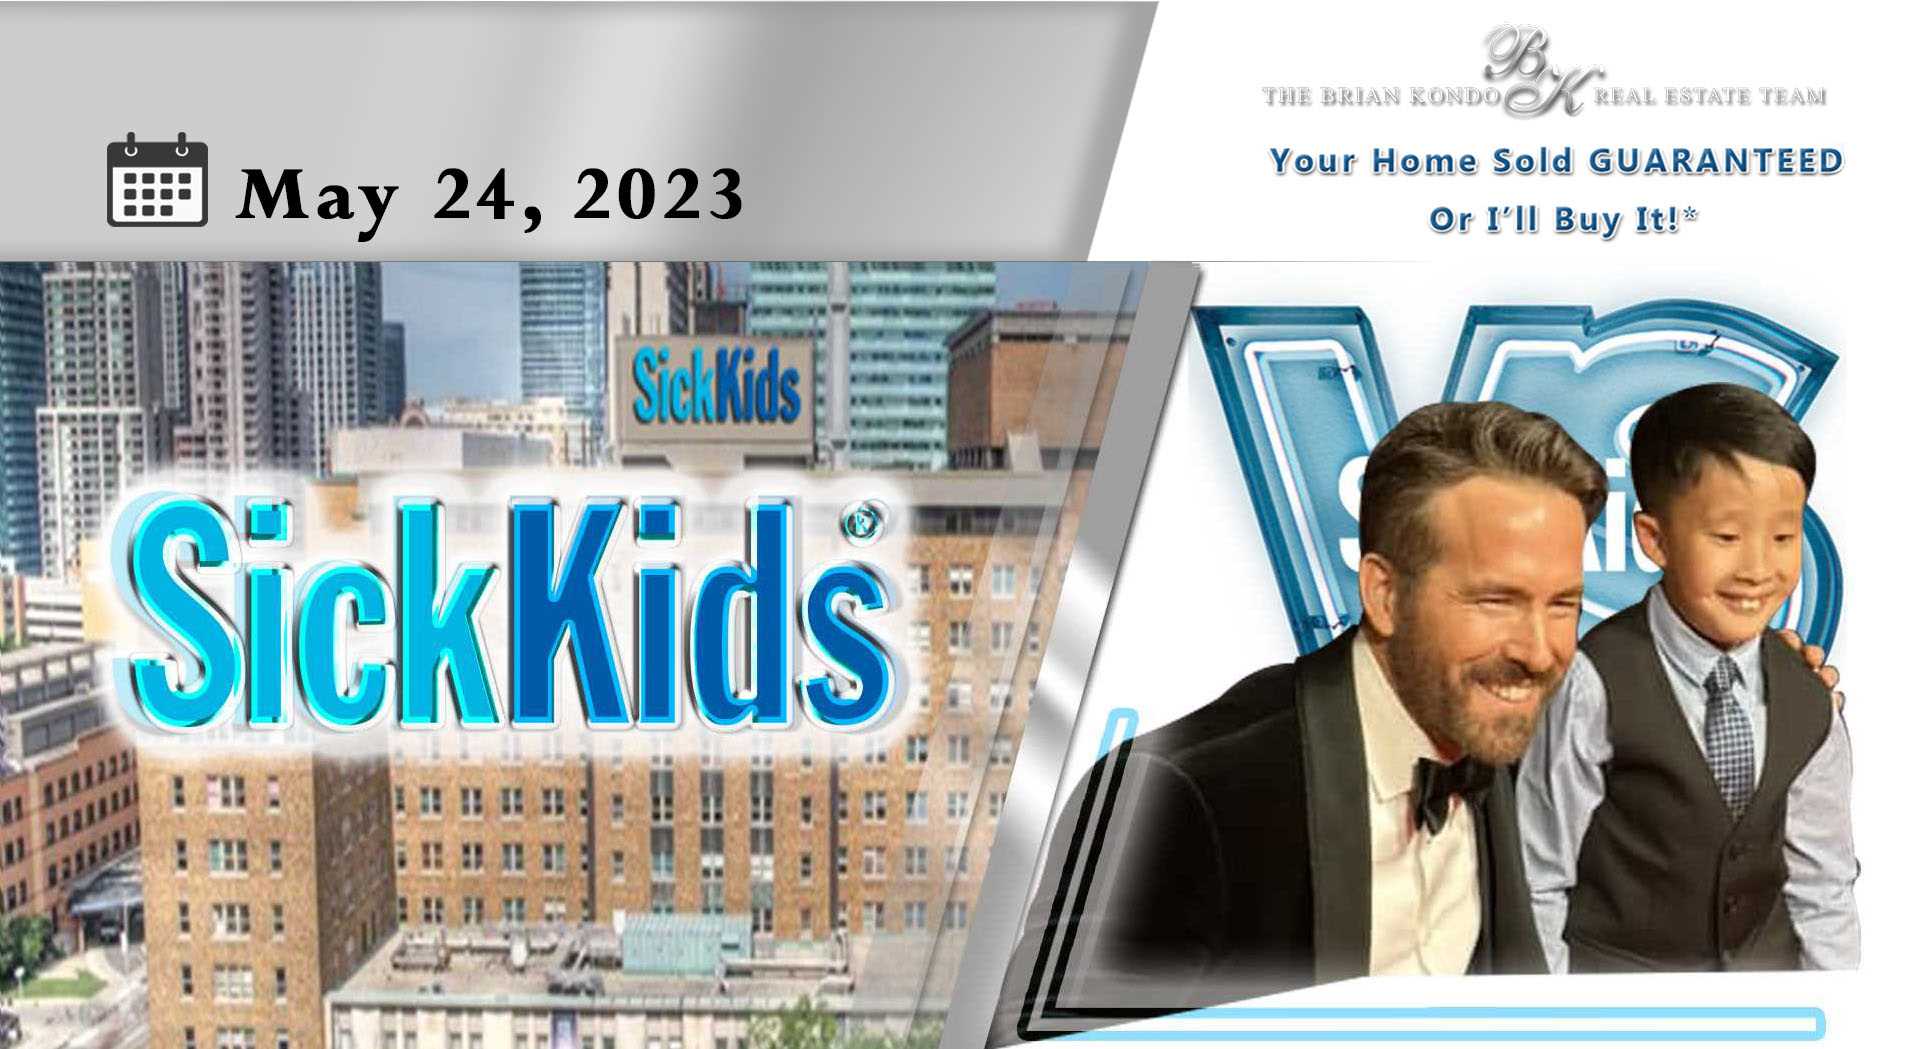 SickKids Hospital Story of The Week | Ryan Reynolds Fundraising Campaign for SickKids Children